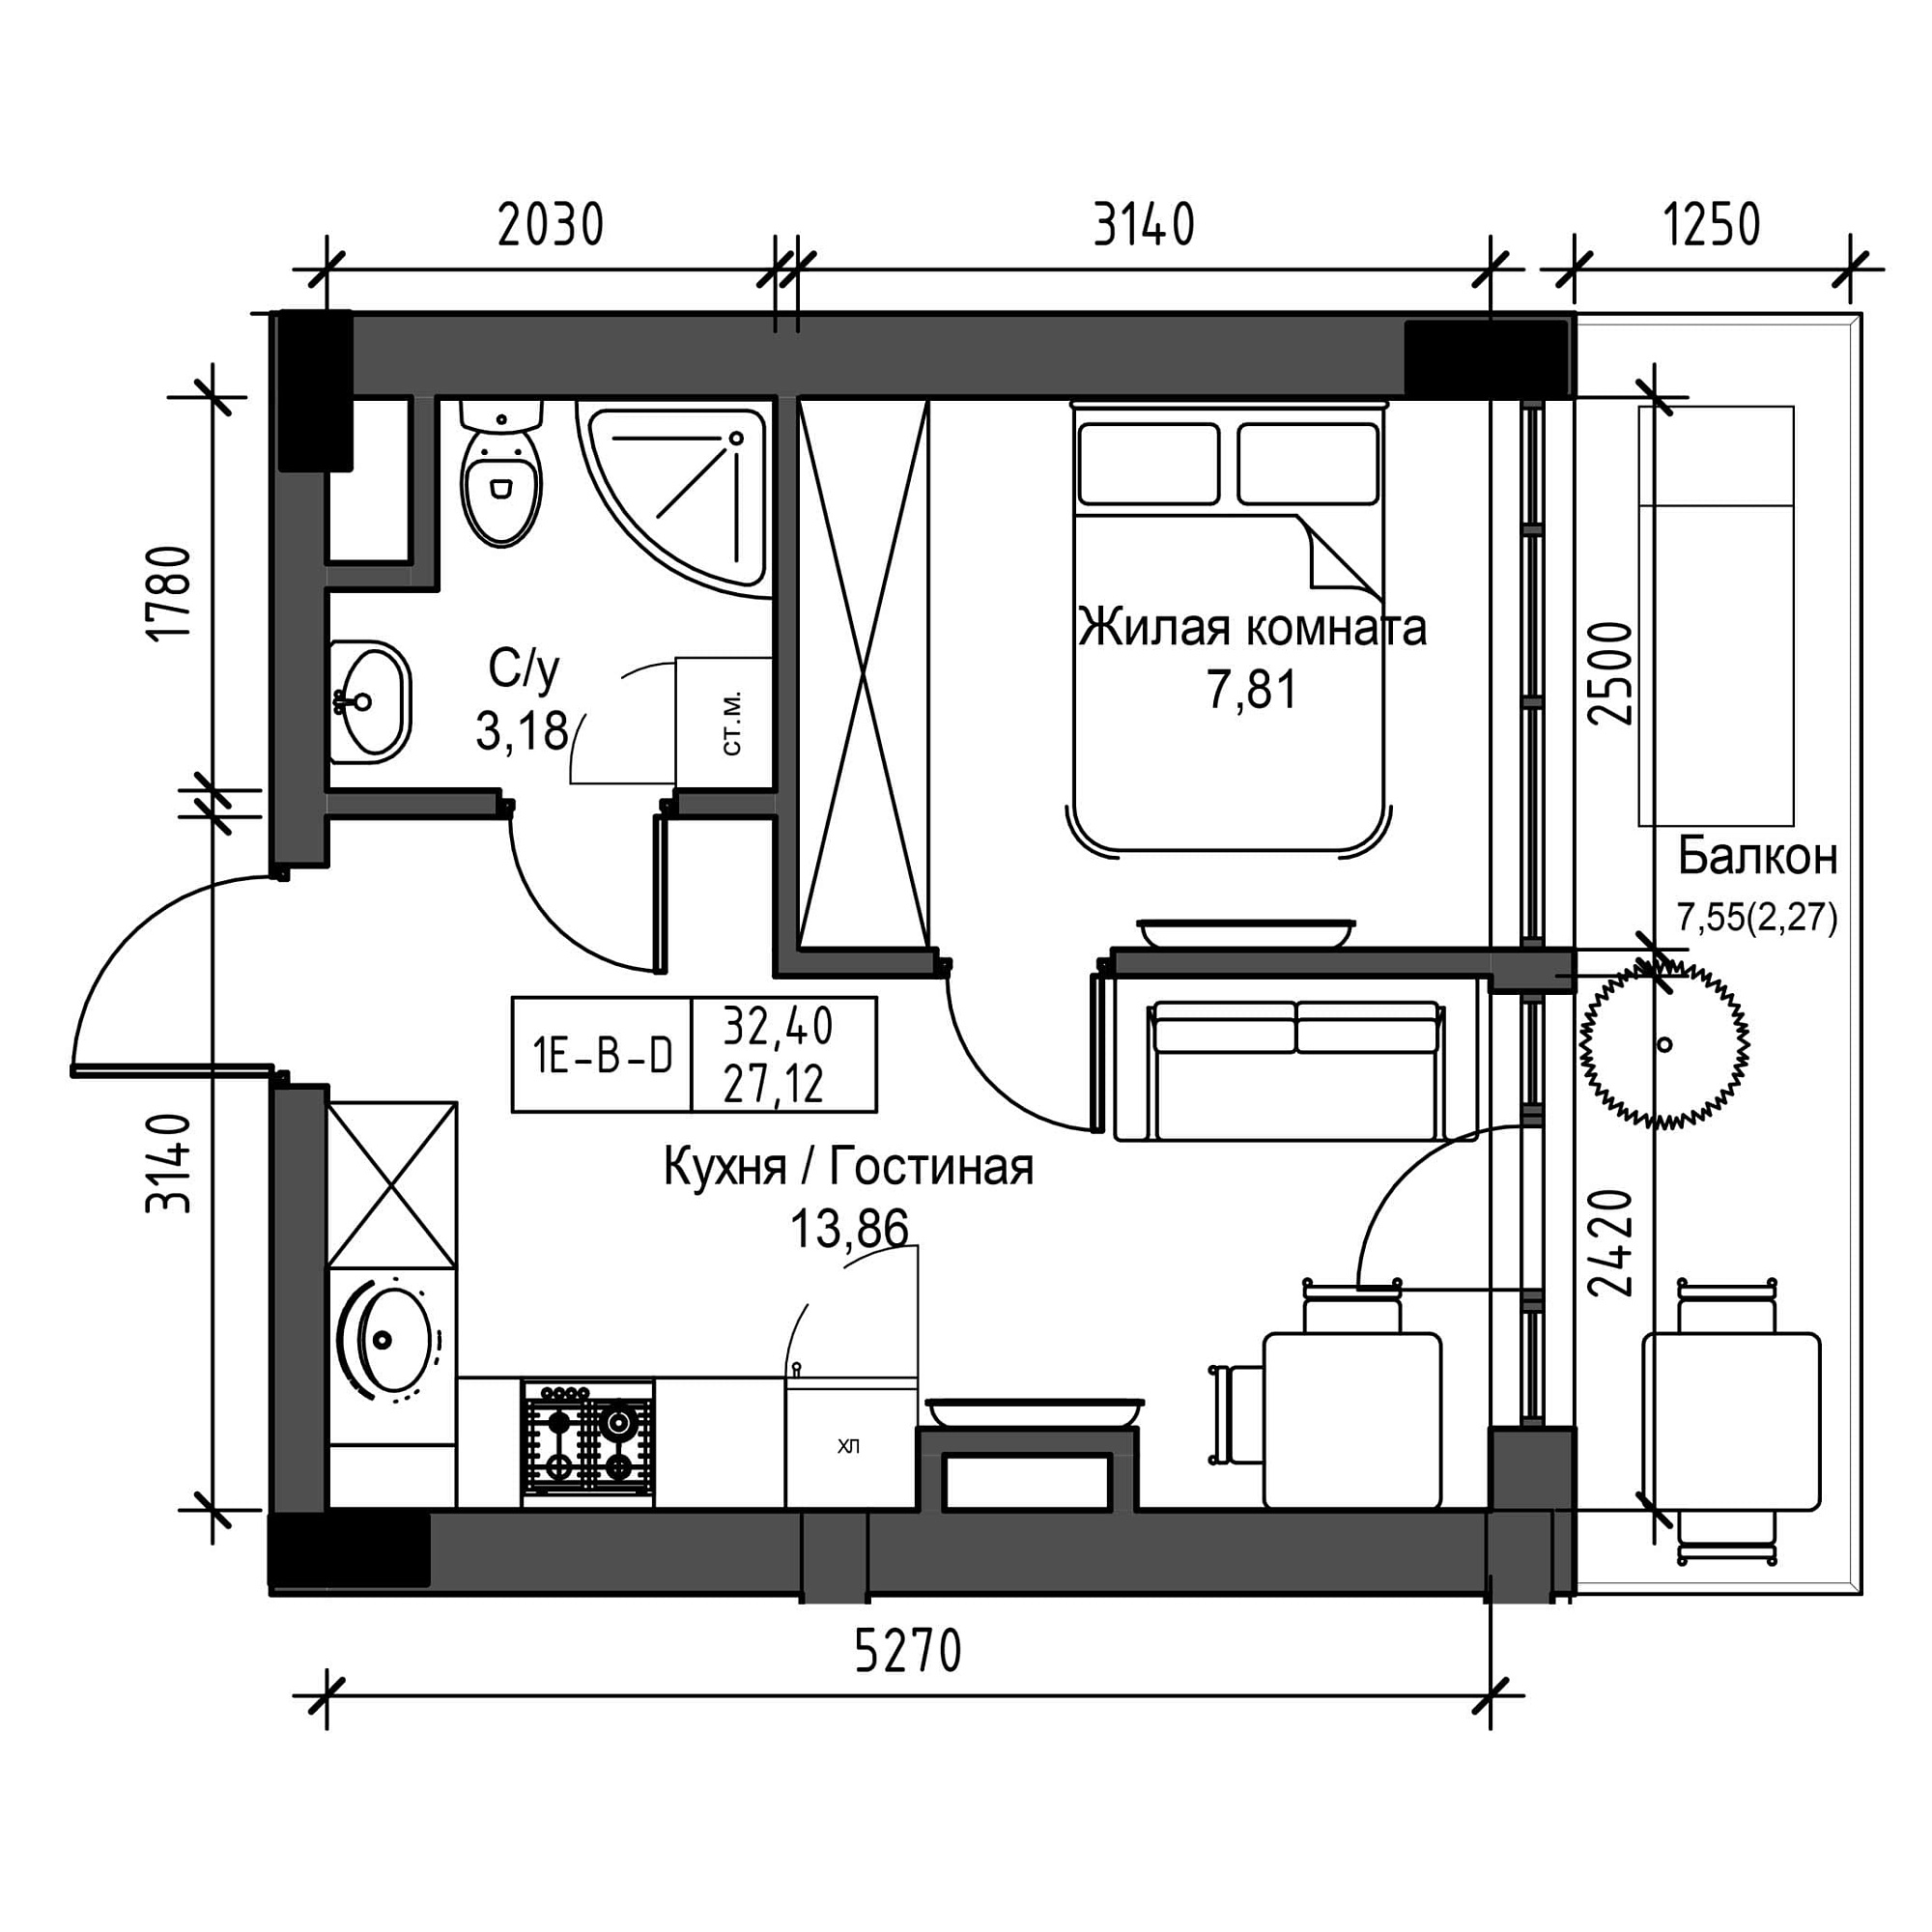 Планування 1-к квартира площею 27.12м2, UM-001-09/0003.